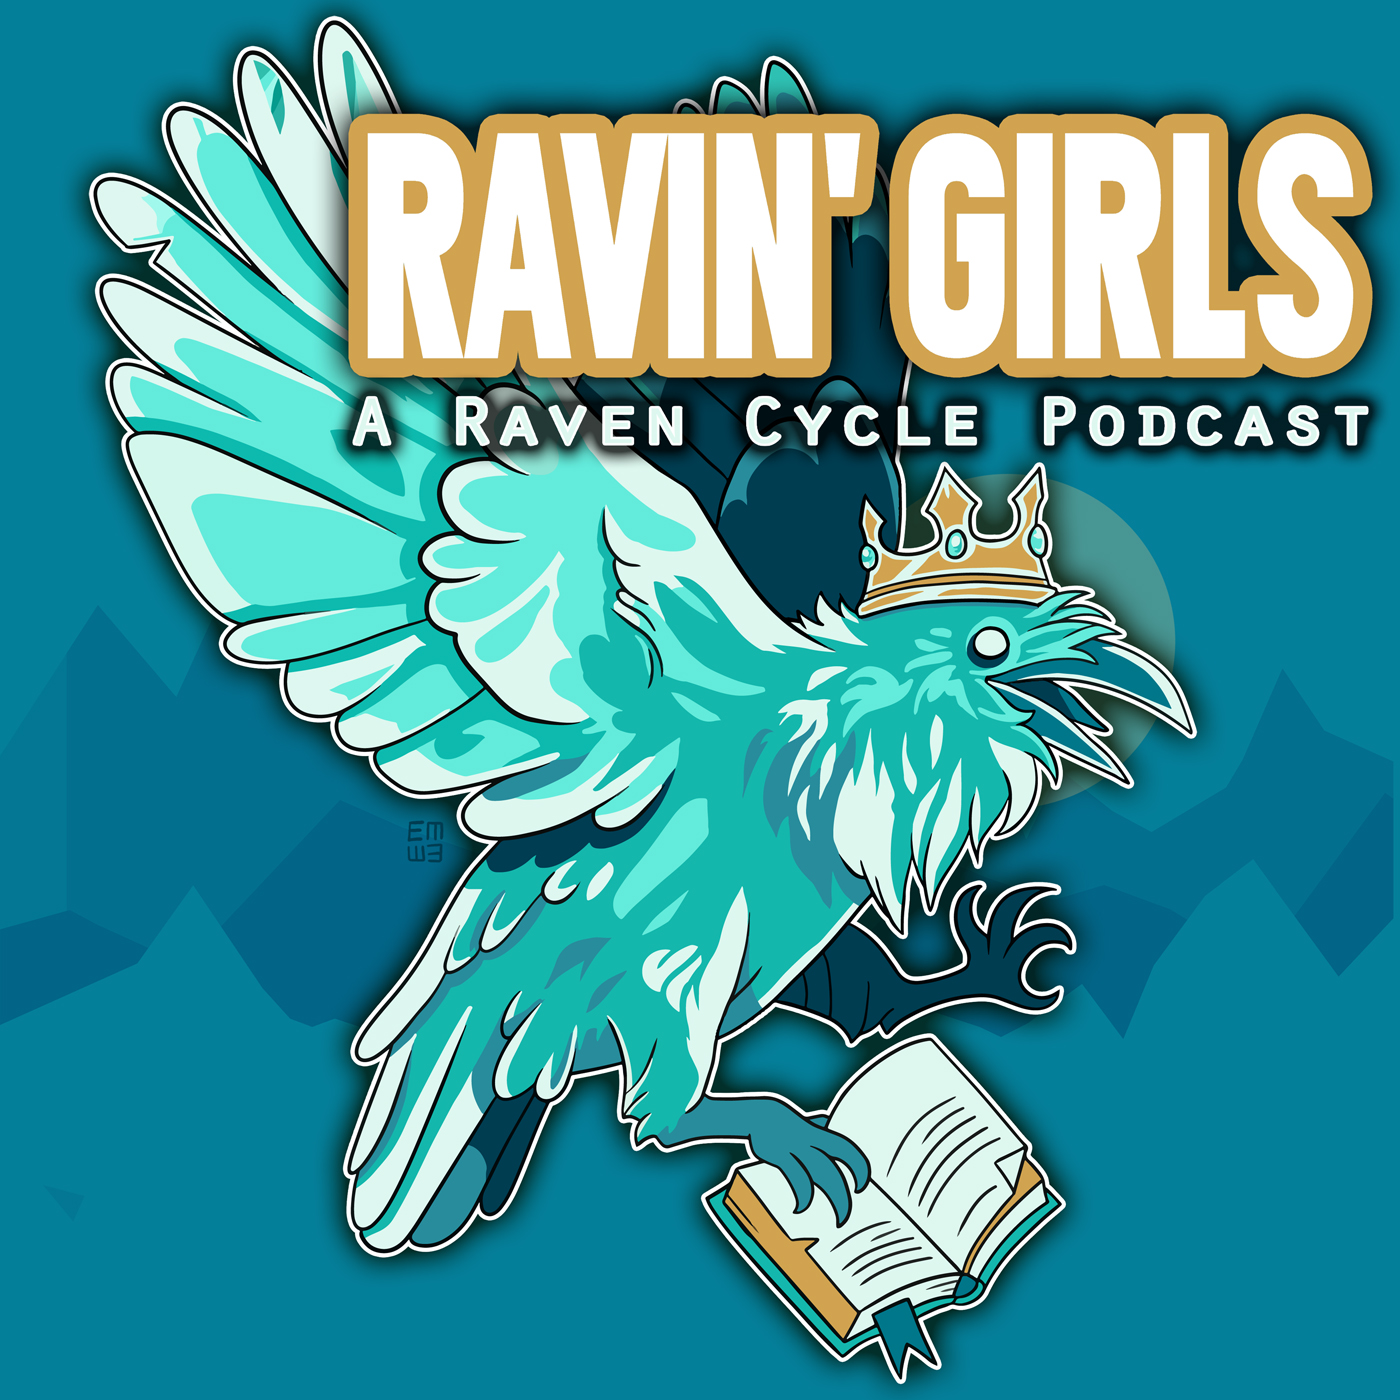 Ravin' Girls Episode 25: The Sweet Spot